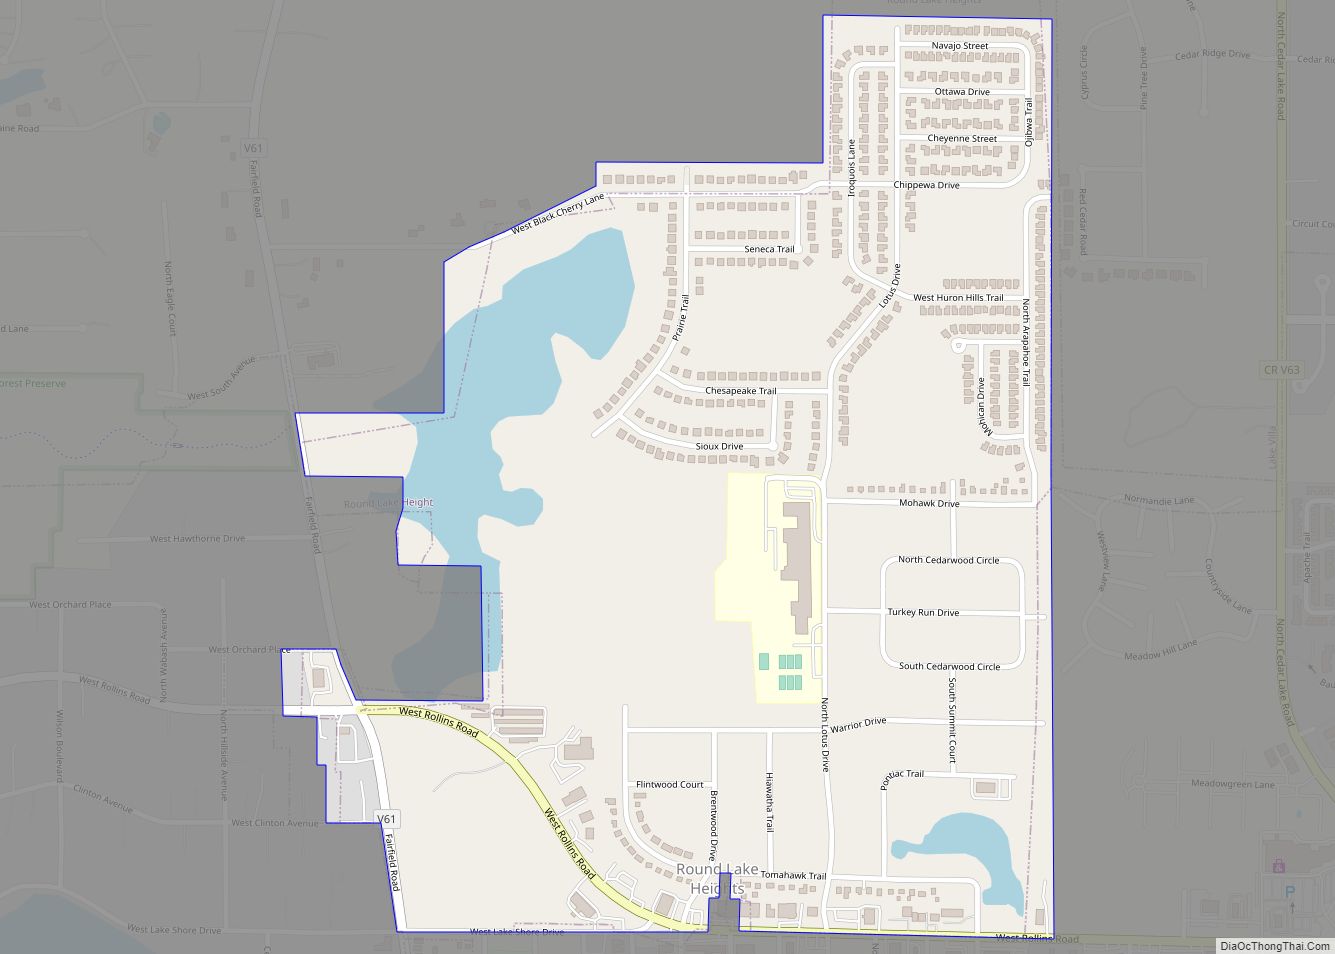 Map of Round Lake Heights village